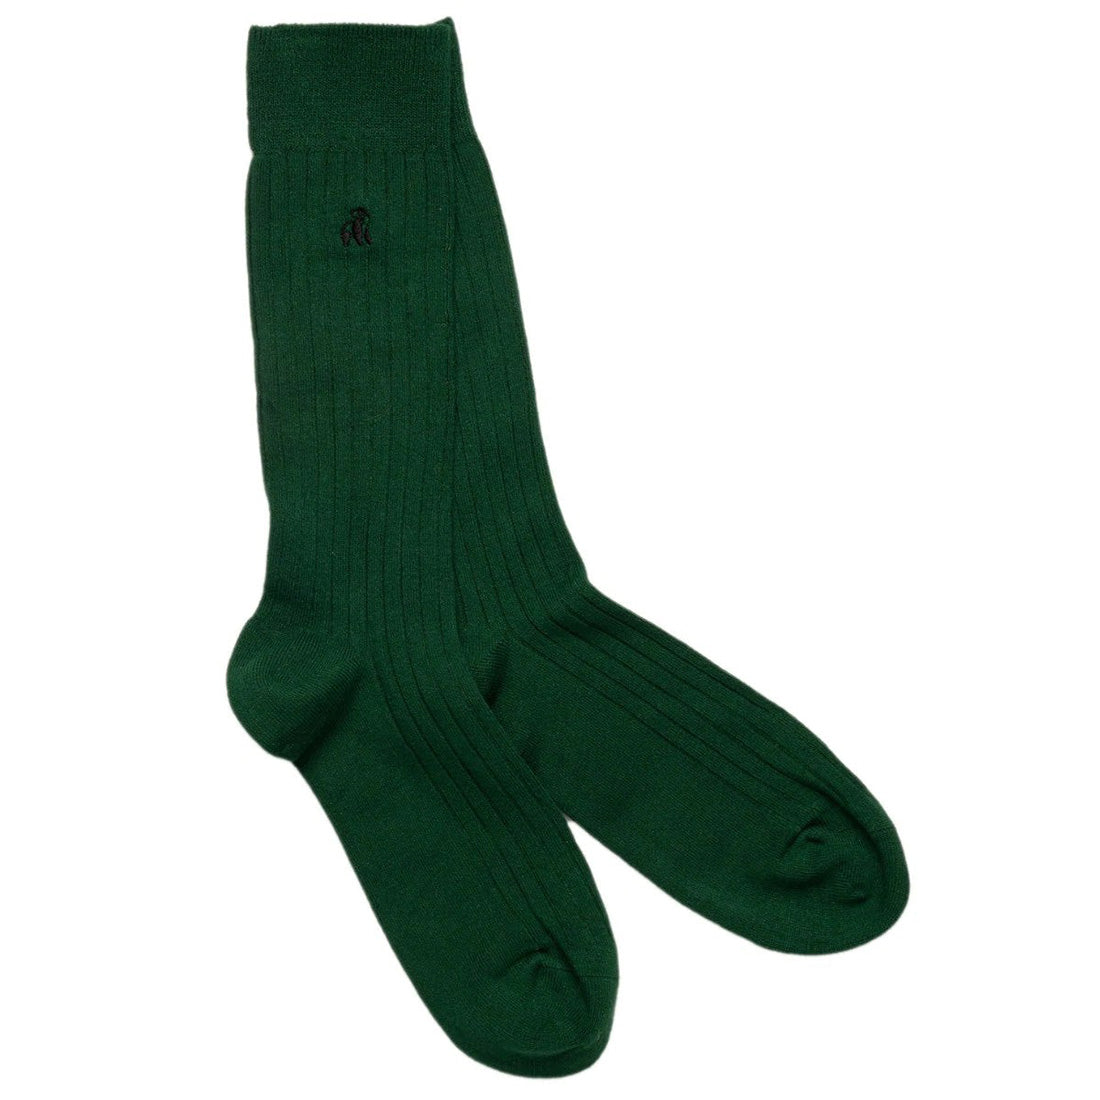 socks-racing-green-bamboo-socks-comfort-cuff-1.jpg